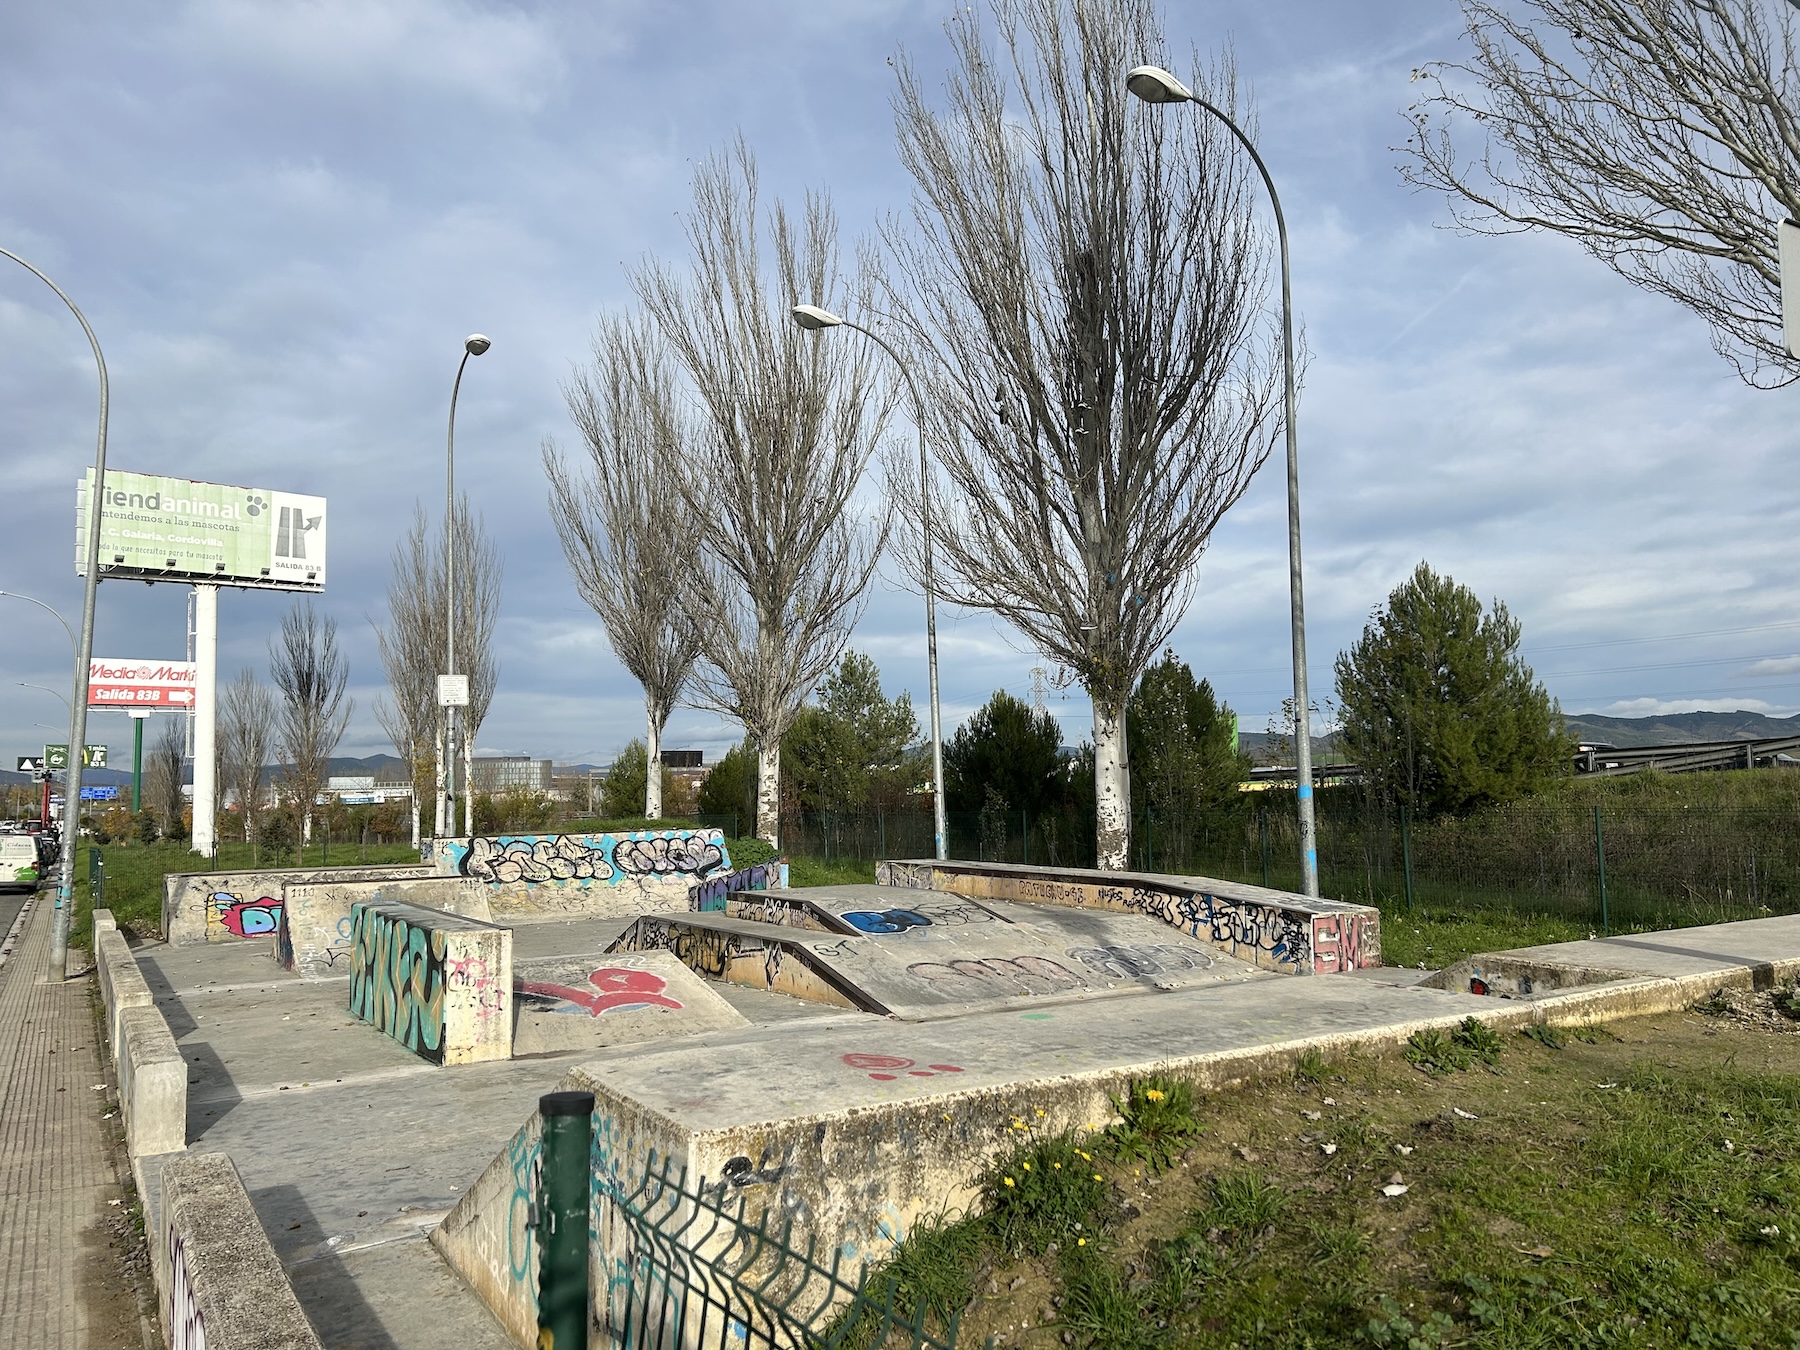 Noáin skatepark